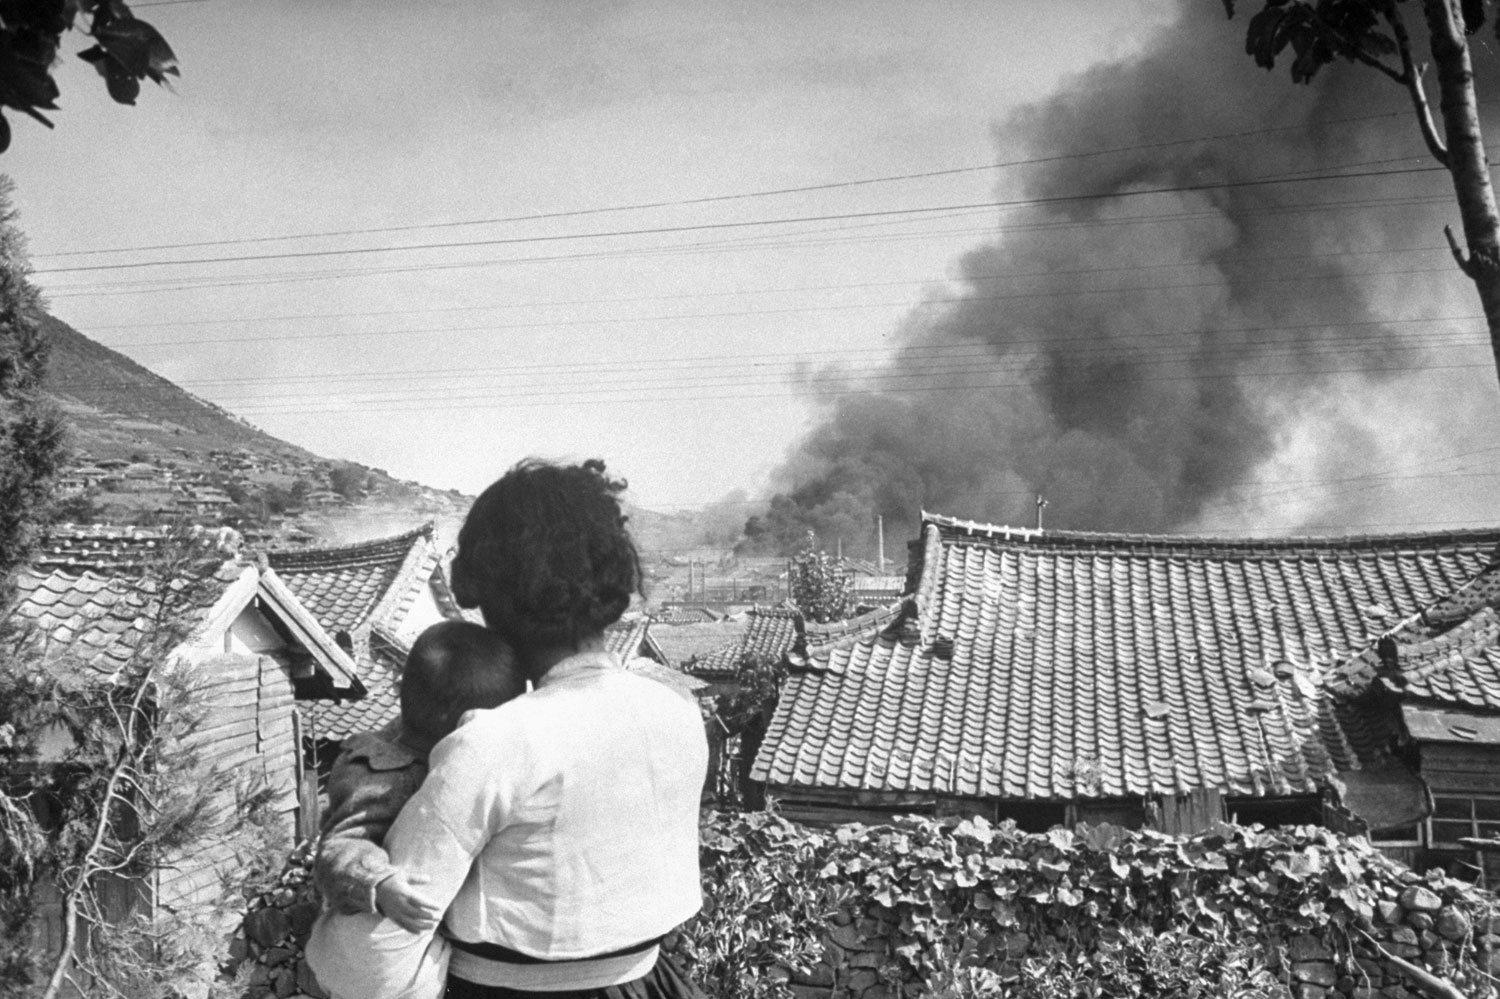 Large fires in a village during a communist uprising, Korea, 1948.